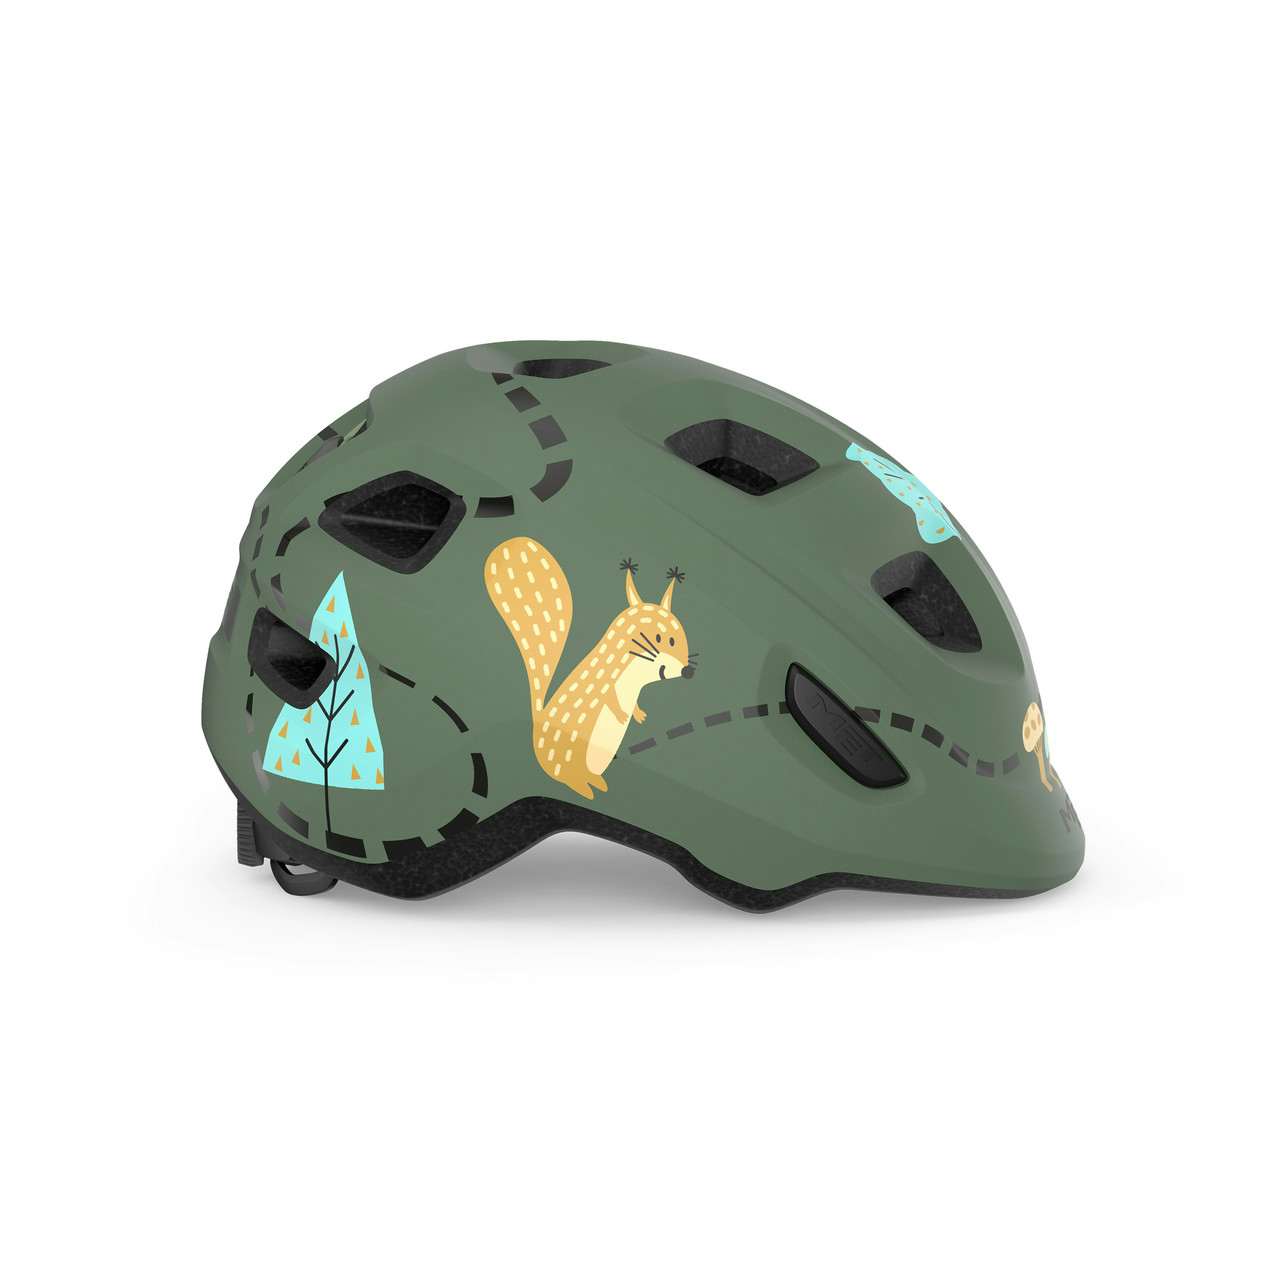 Hooray Helmet Green Forest/Glossy